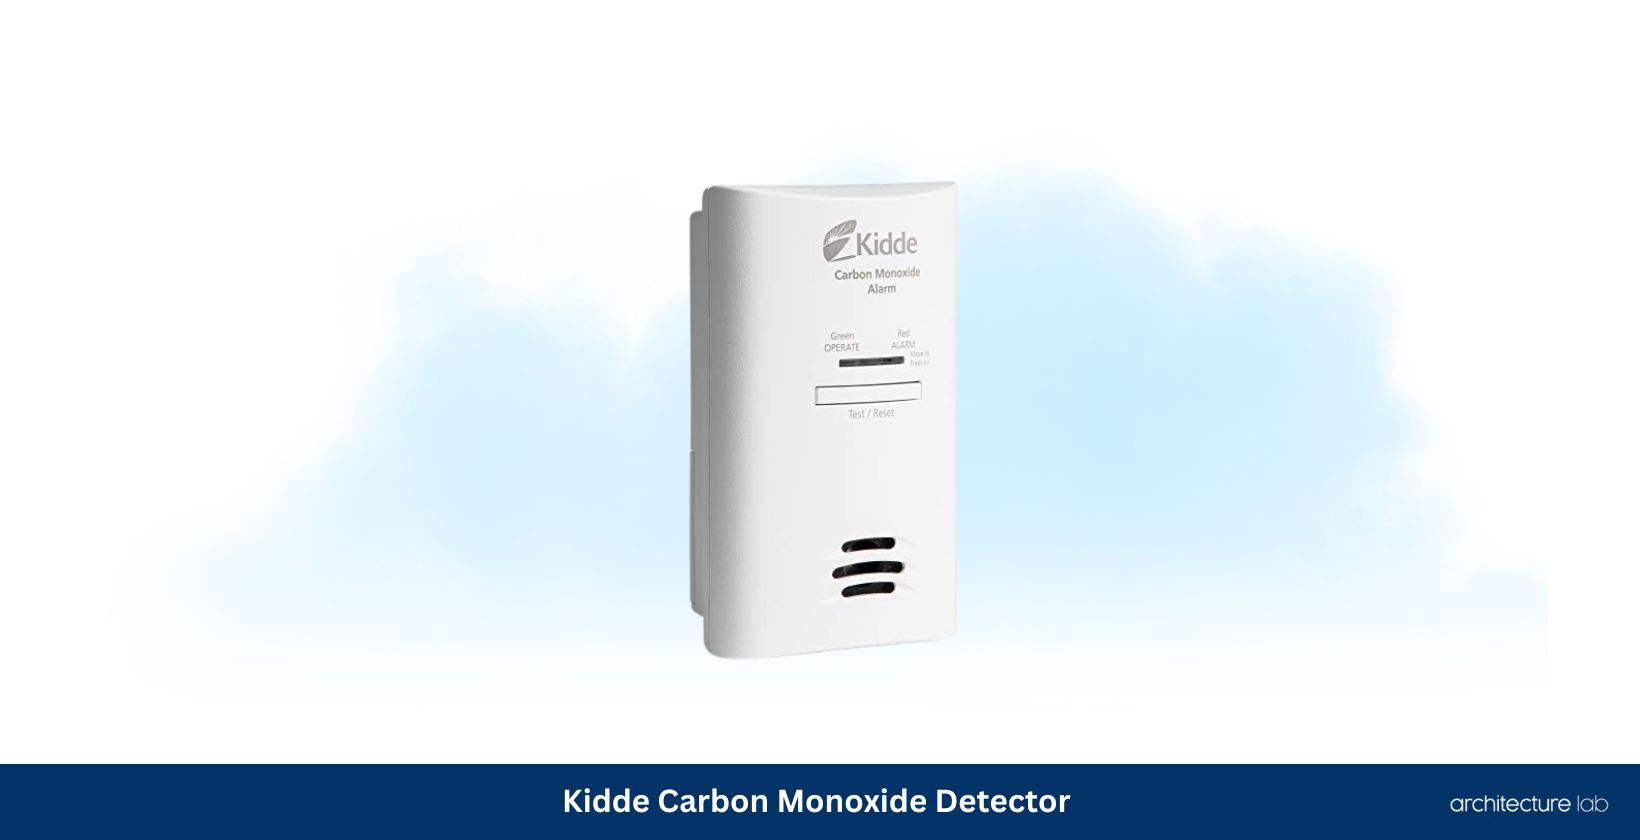 Kidde carbon monoxide detector